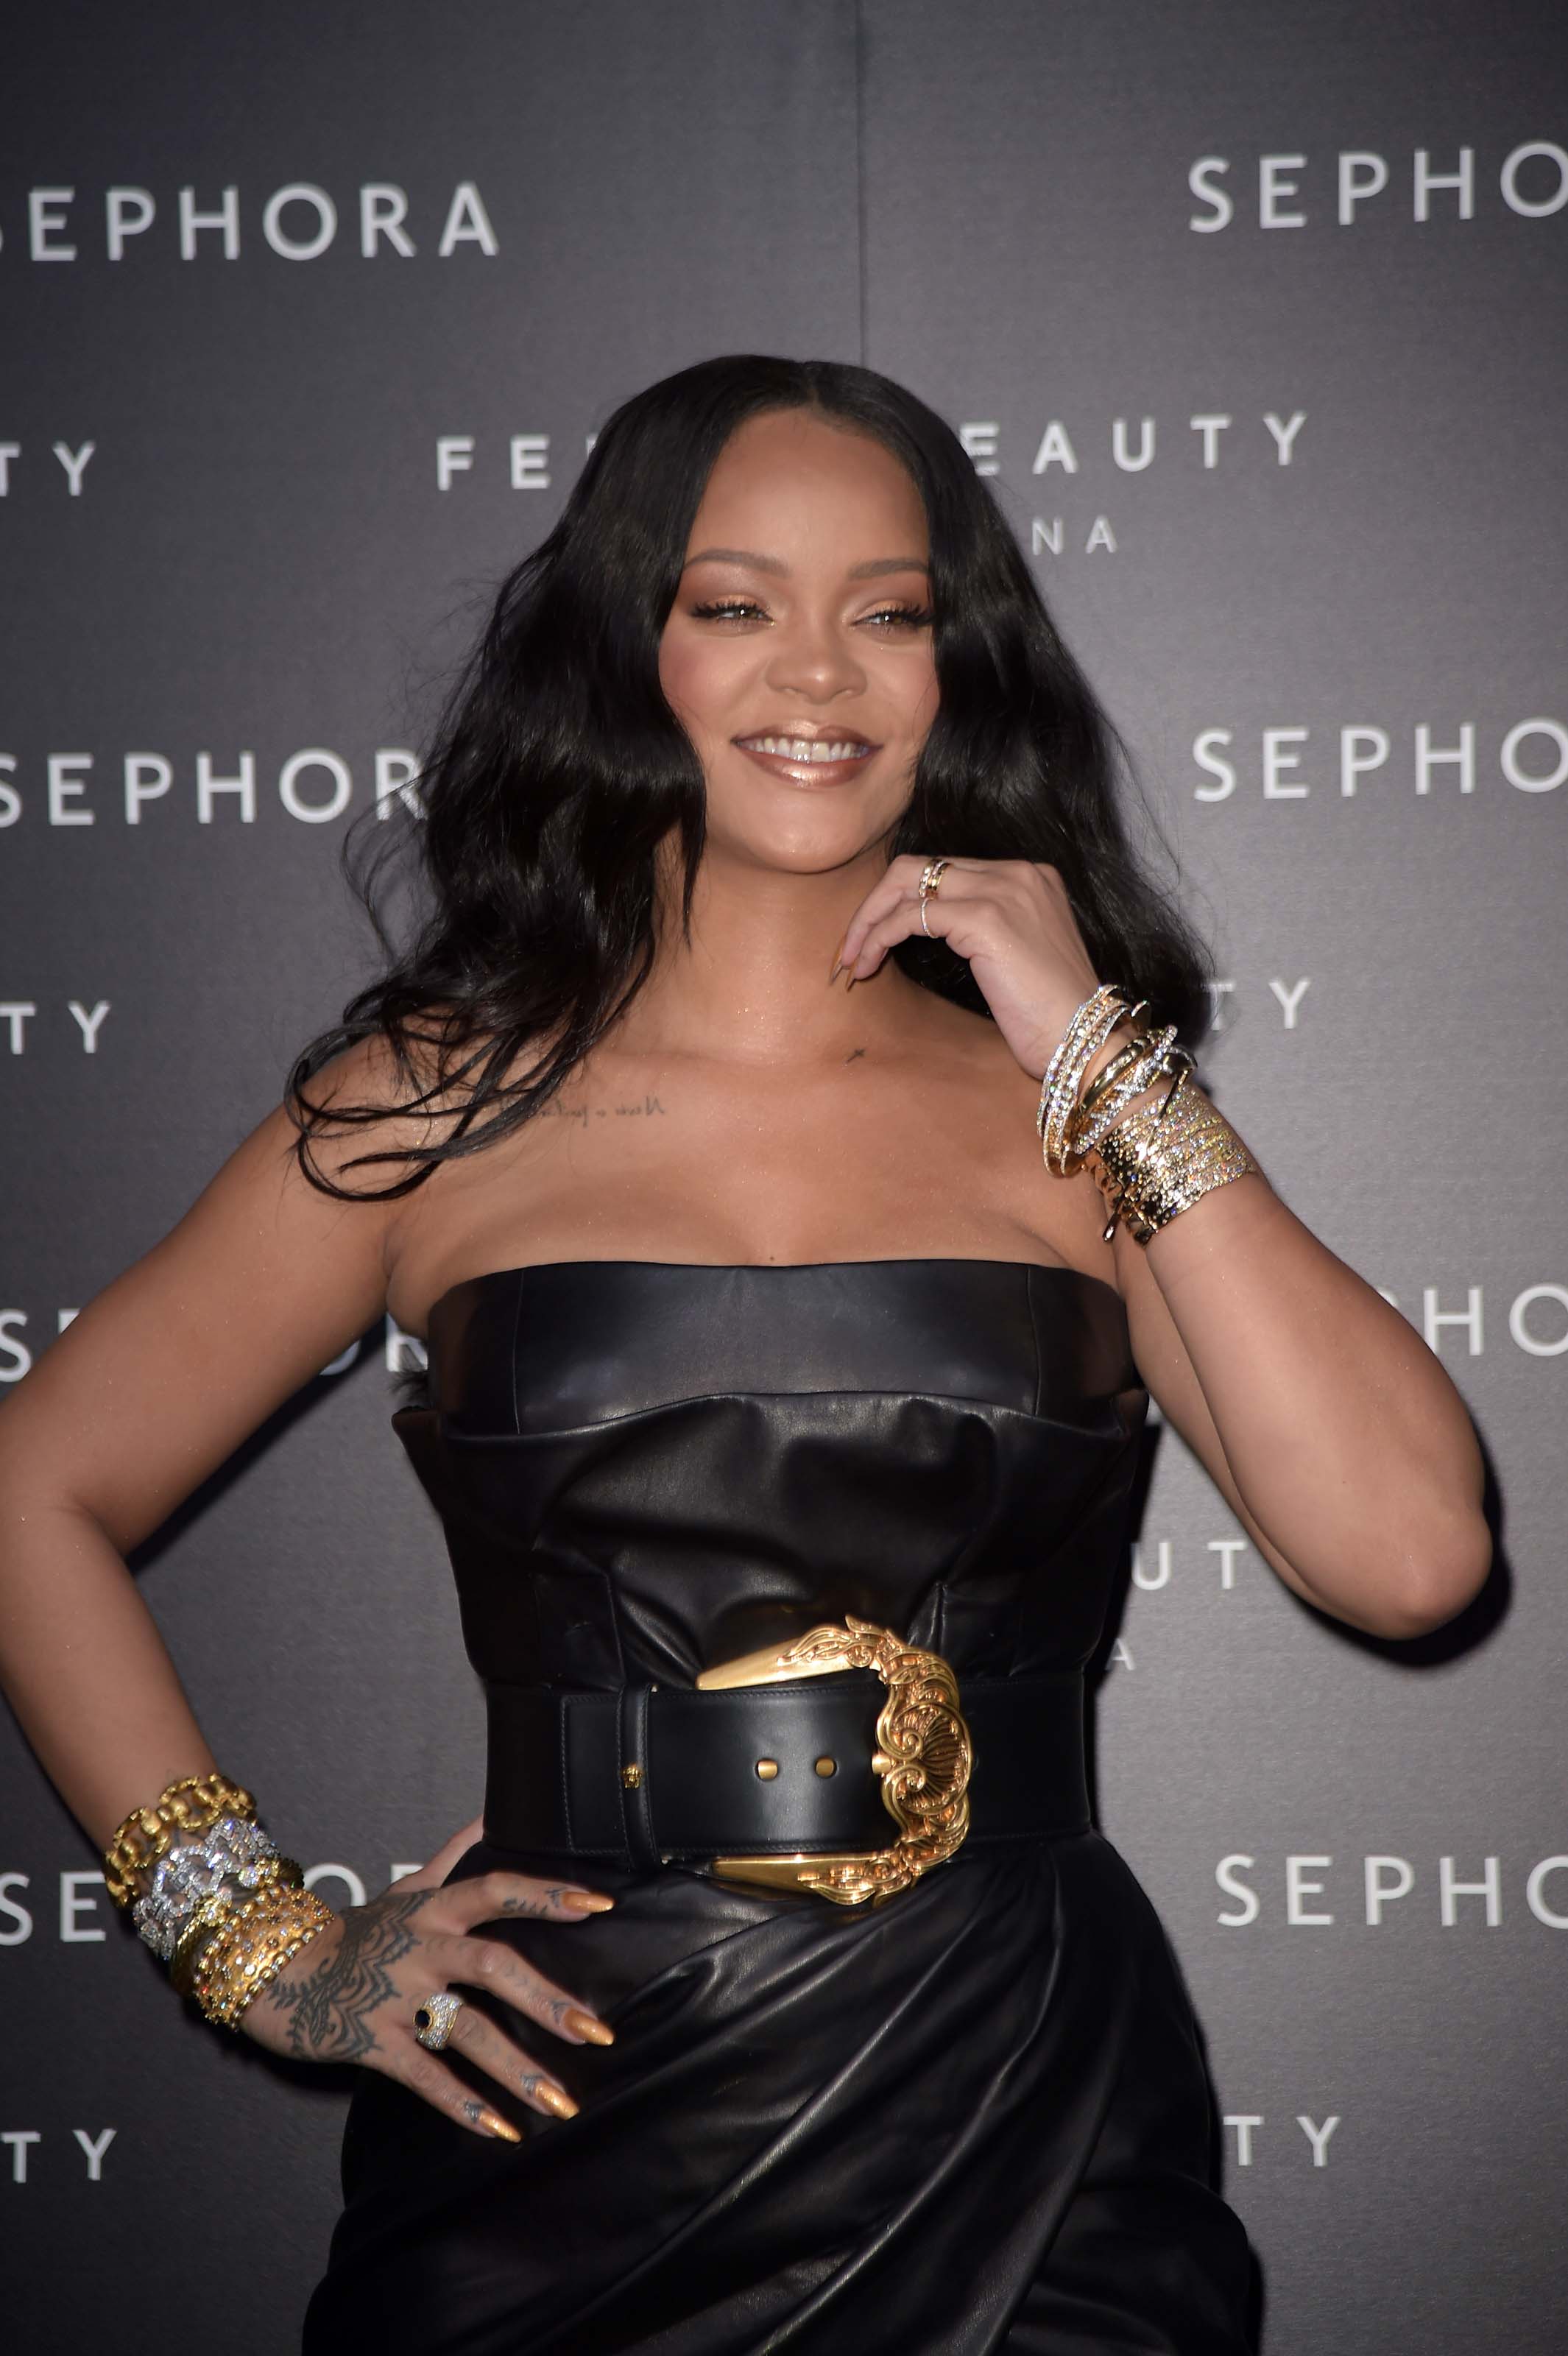 Rihanna at the launch of make-up “Fenty beauty” line